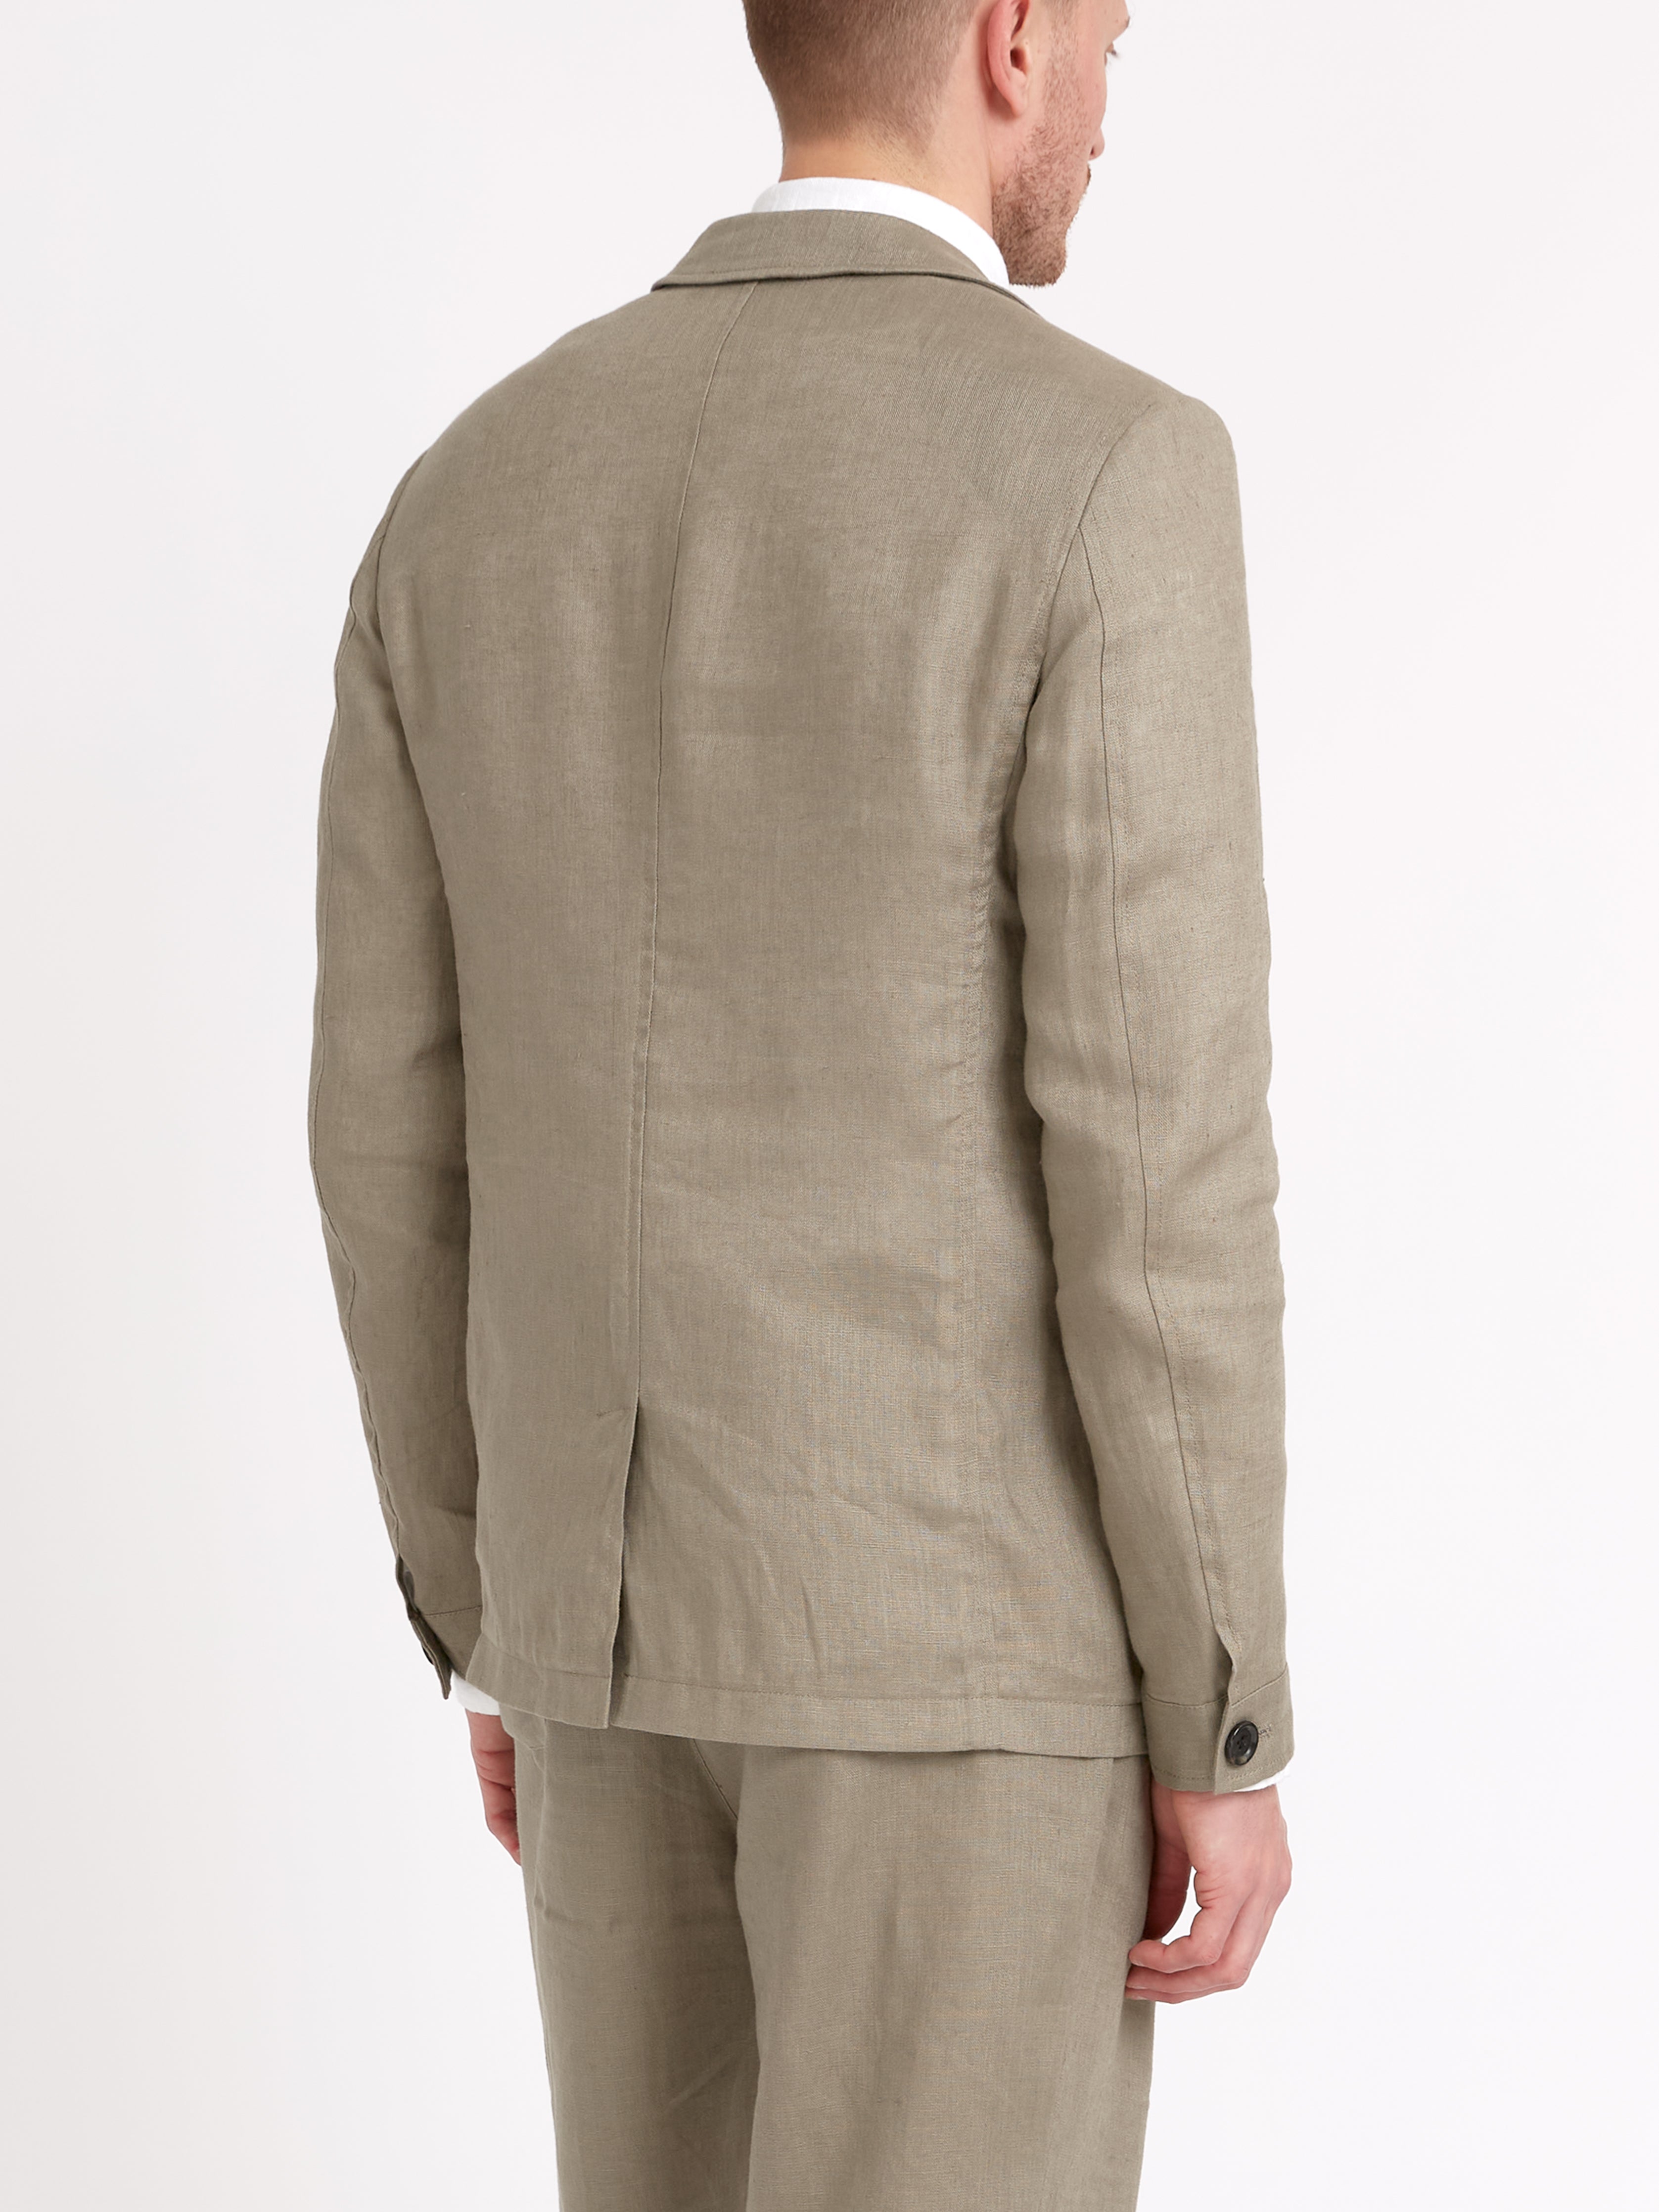 Stone Padworth Theobald Suit